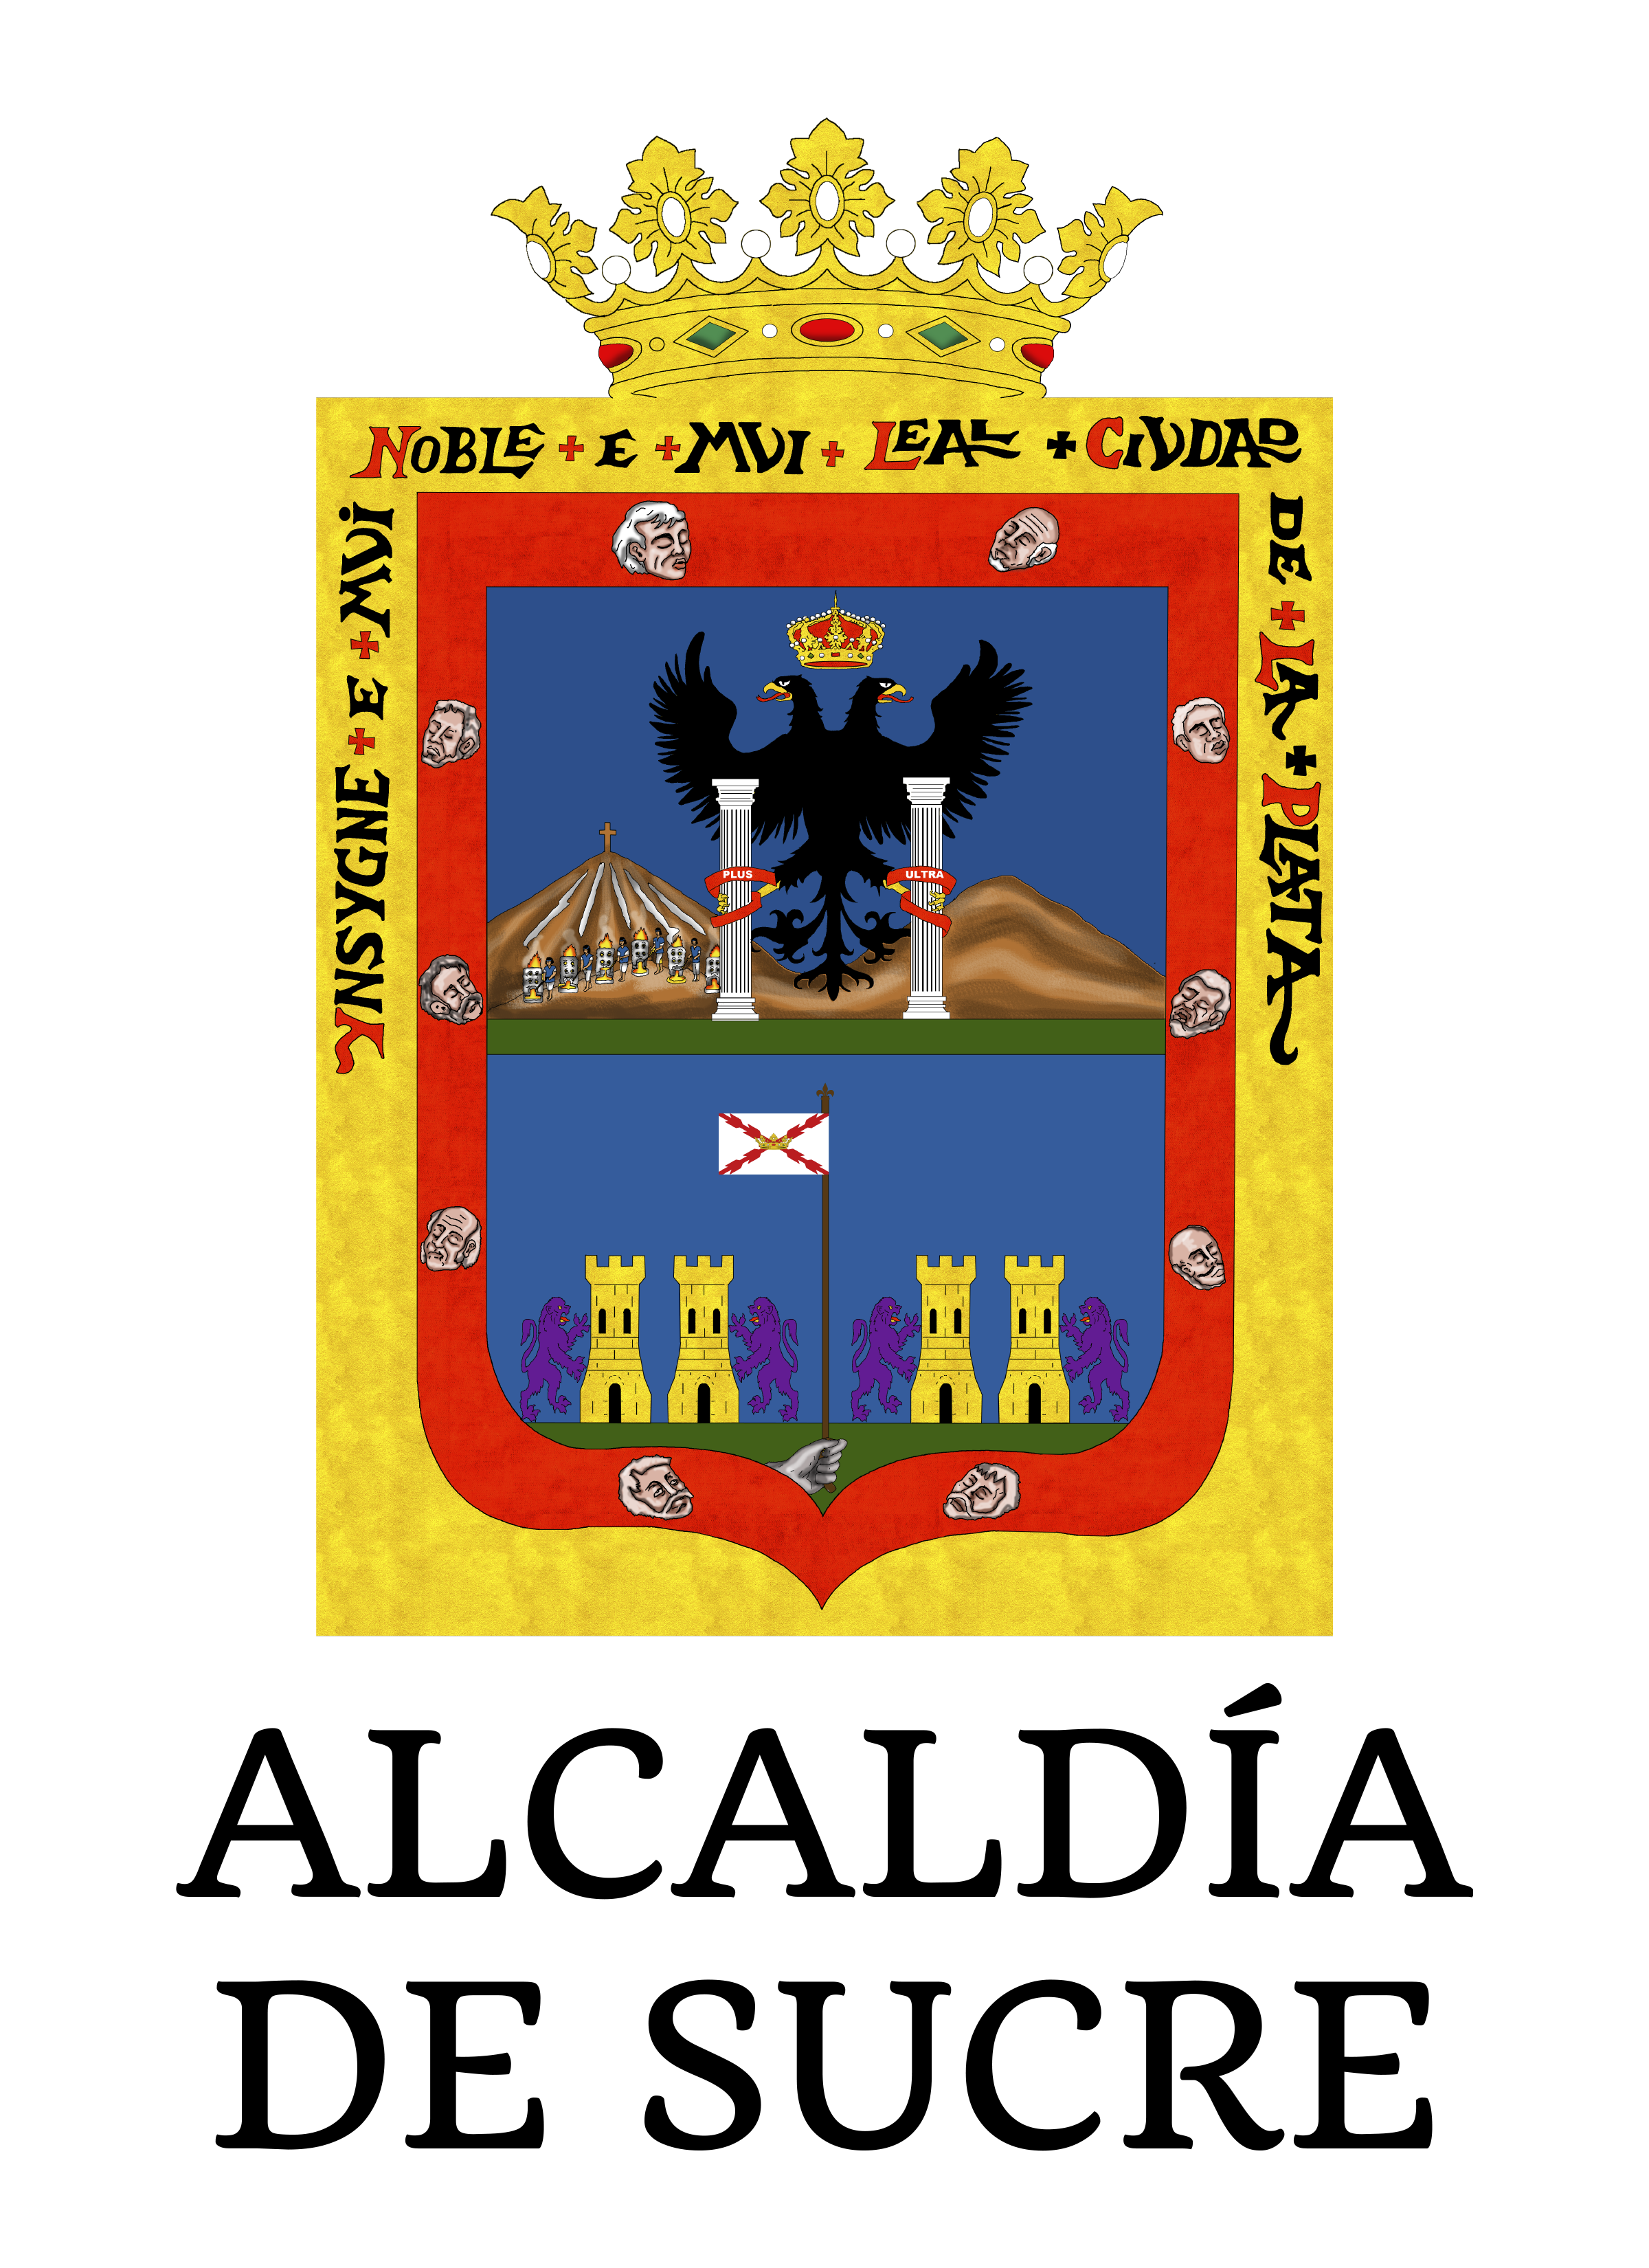 ALCALDÍA DE SUCRE